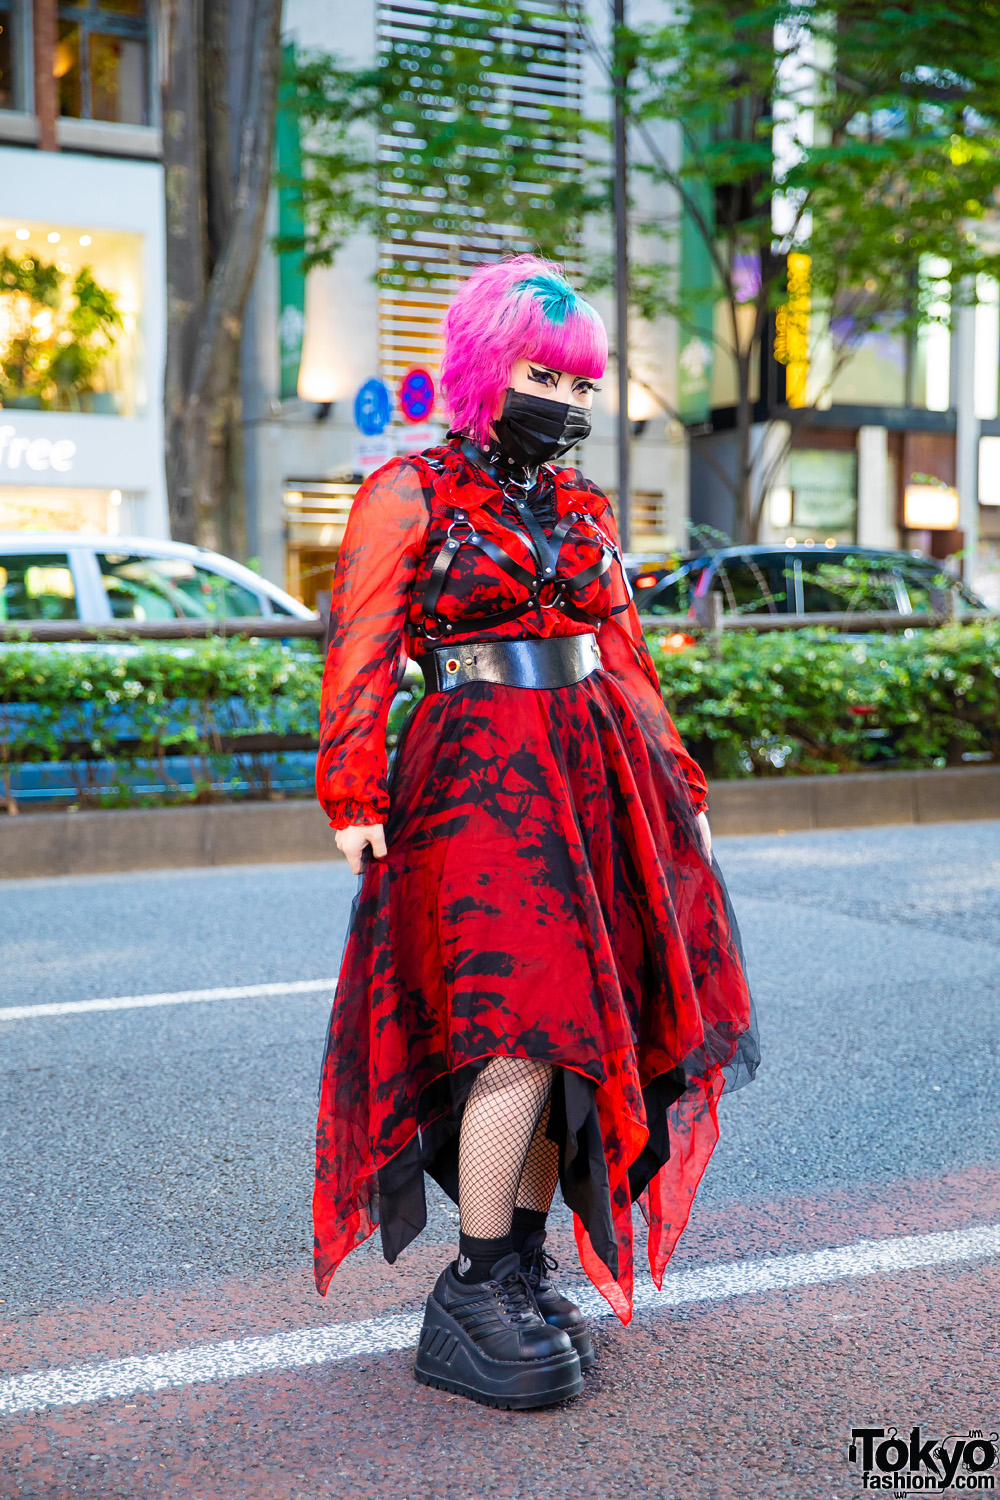 Harajuku Graphic Streetwear Style w/ Tri-Color Undercut, Purple Contacts, Black Eye Makeup, Punk Rave Handkerchief Dress, Fishnets, Leather Harness & Demonia Platforms